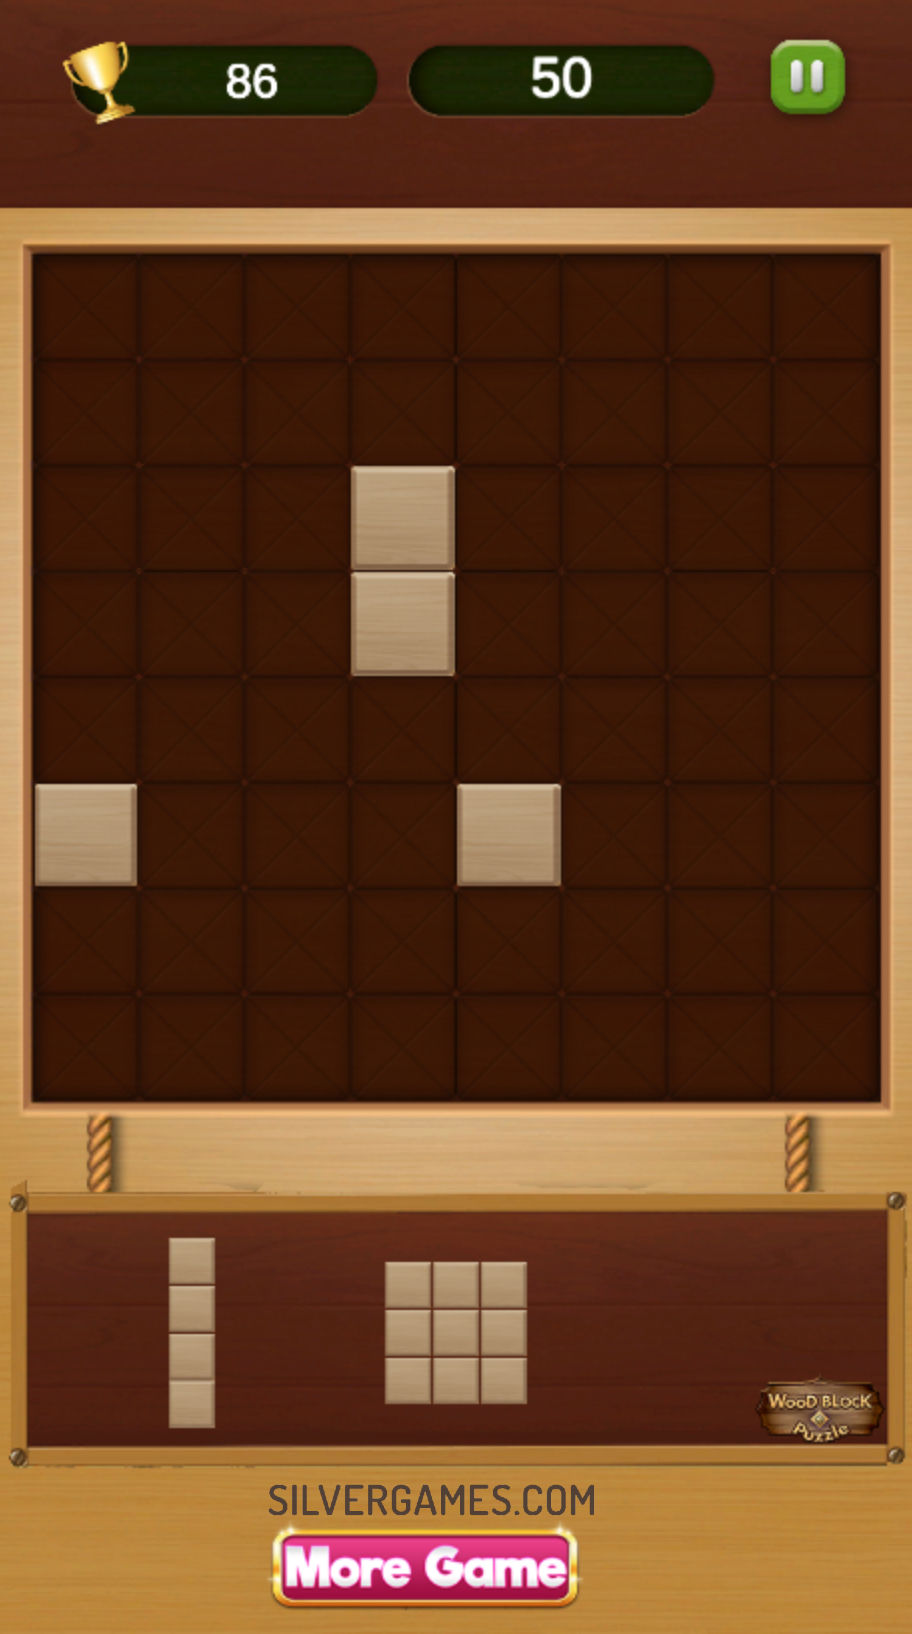 Bloxe: Wood Block Puzzle Game by Sabia Media Israel LTD